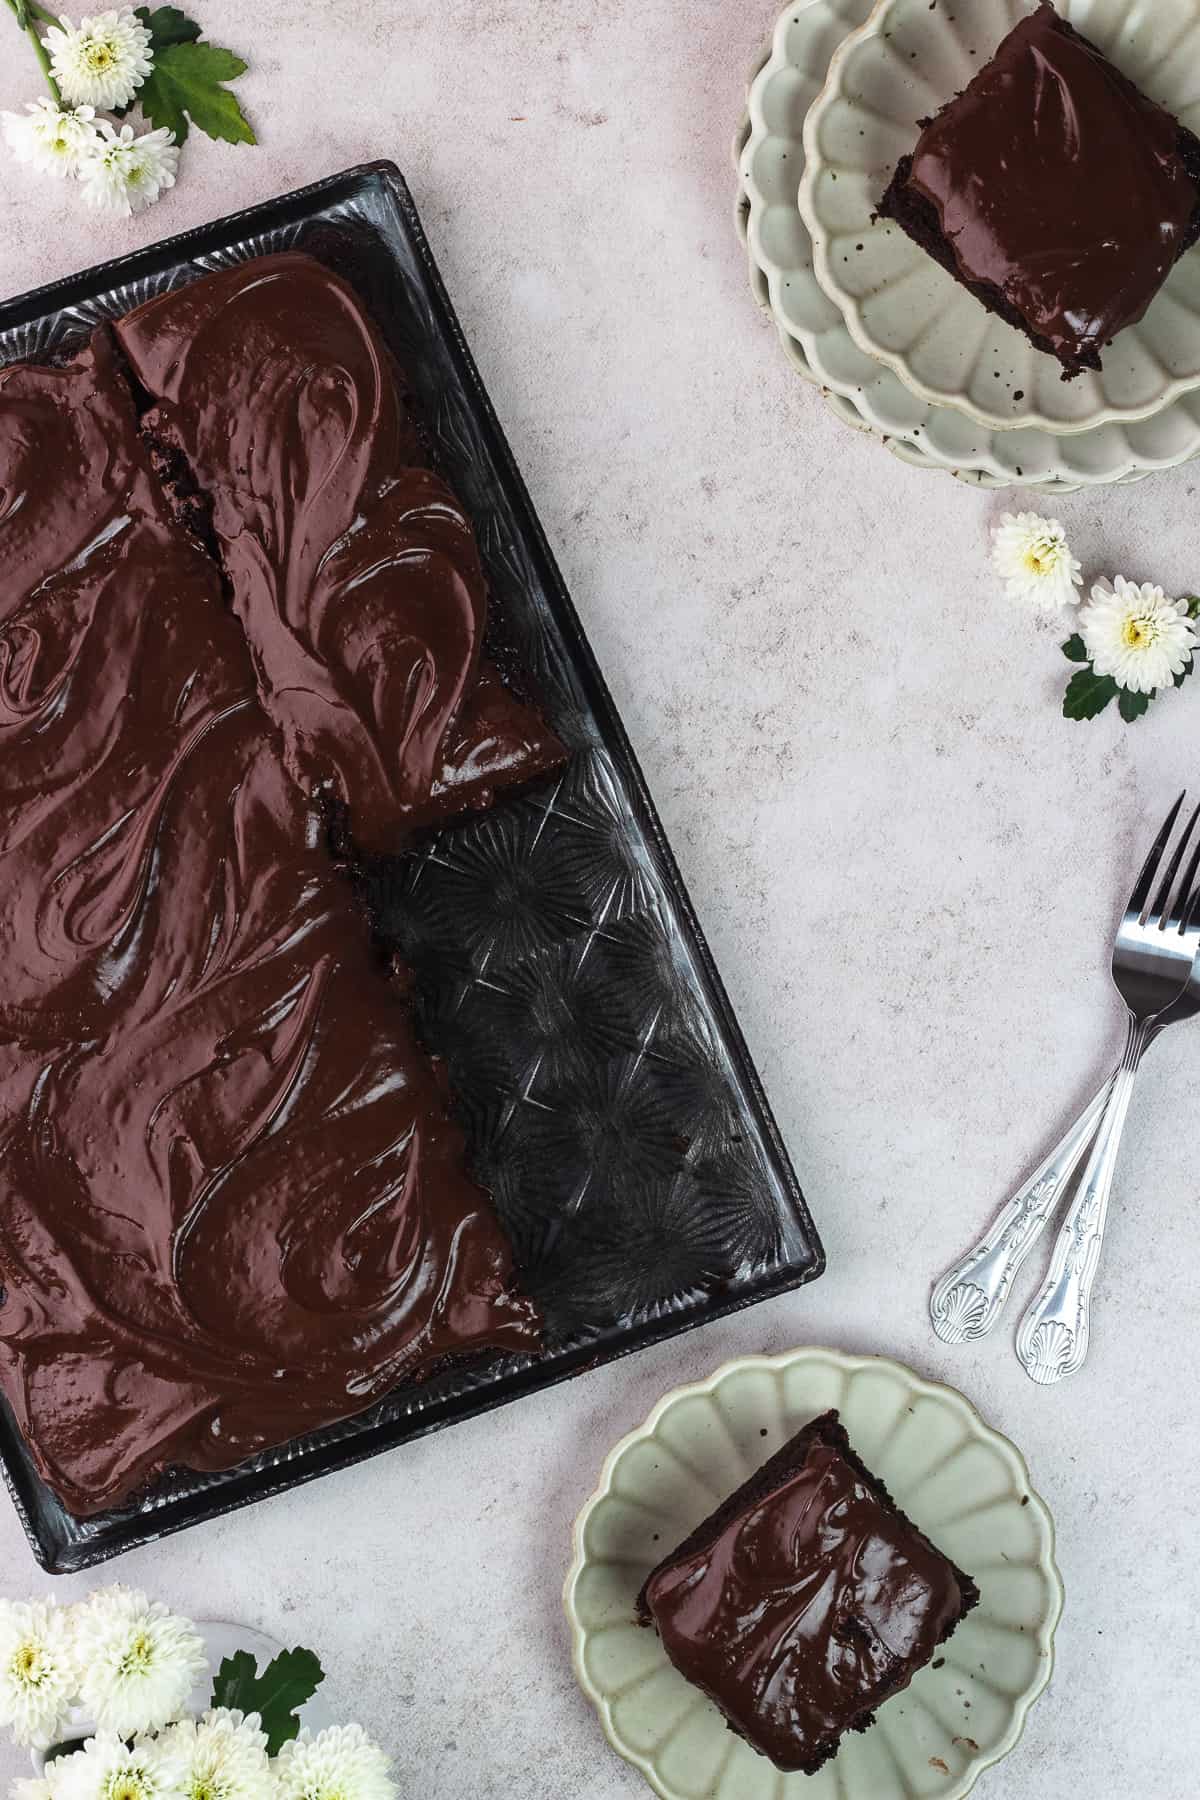 Malted Chocolate Cake